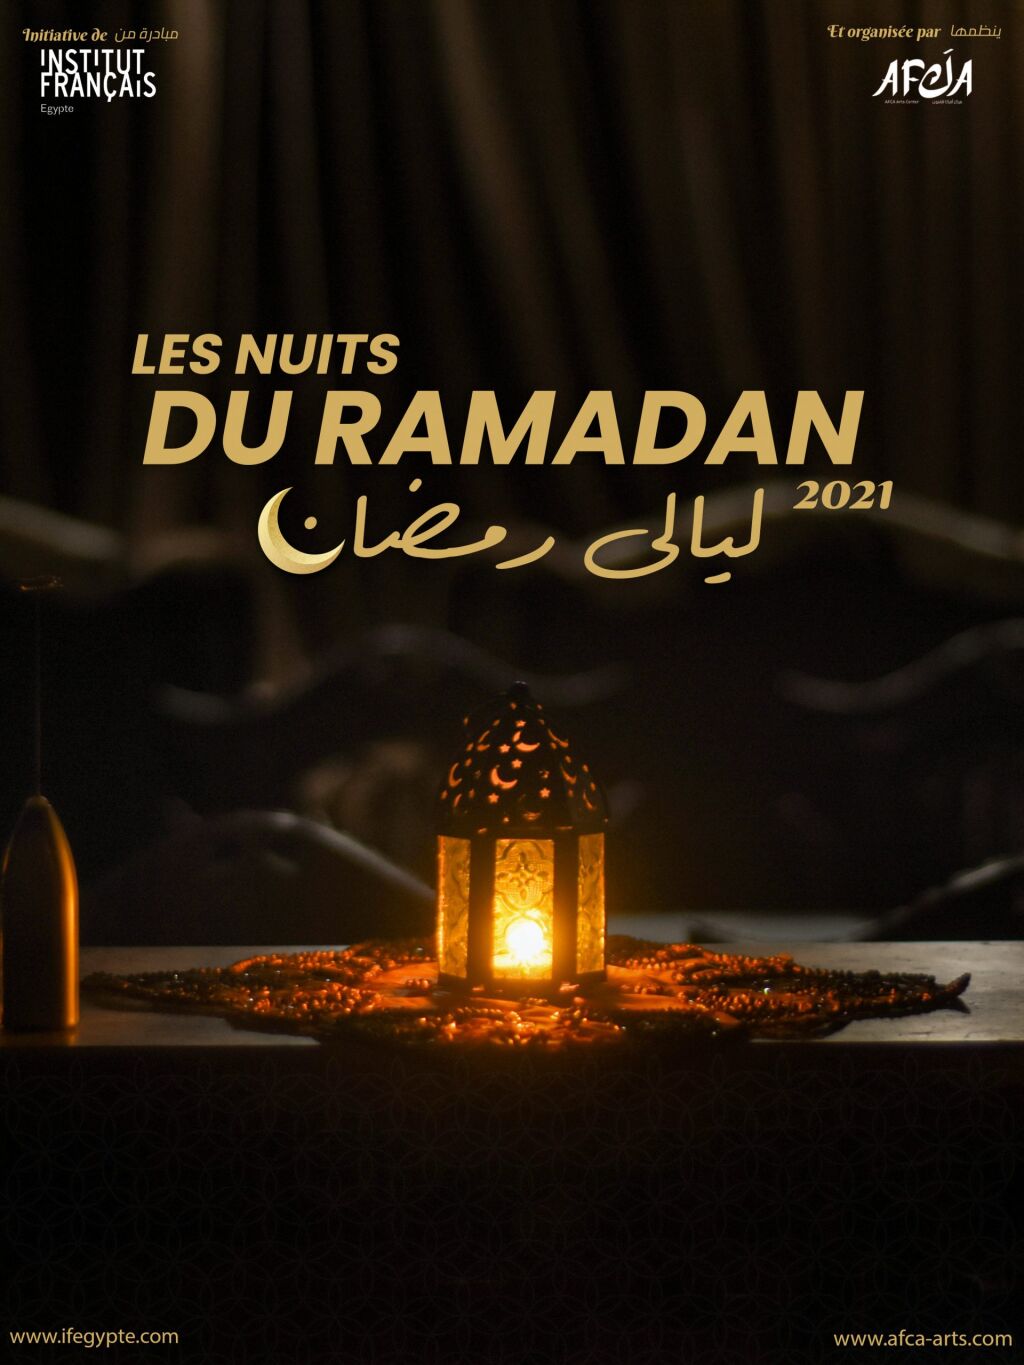 Ramadan nights French institute in Egypt